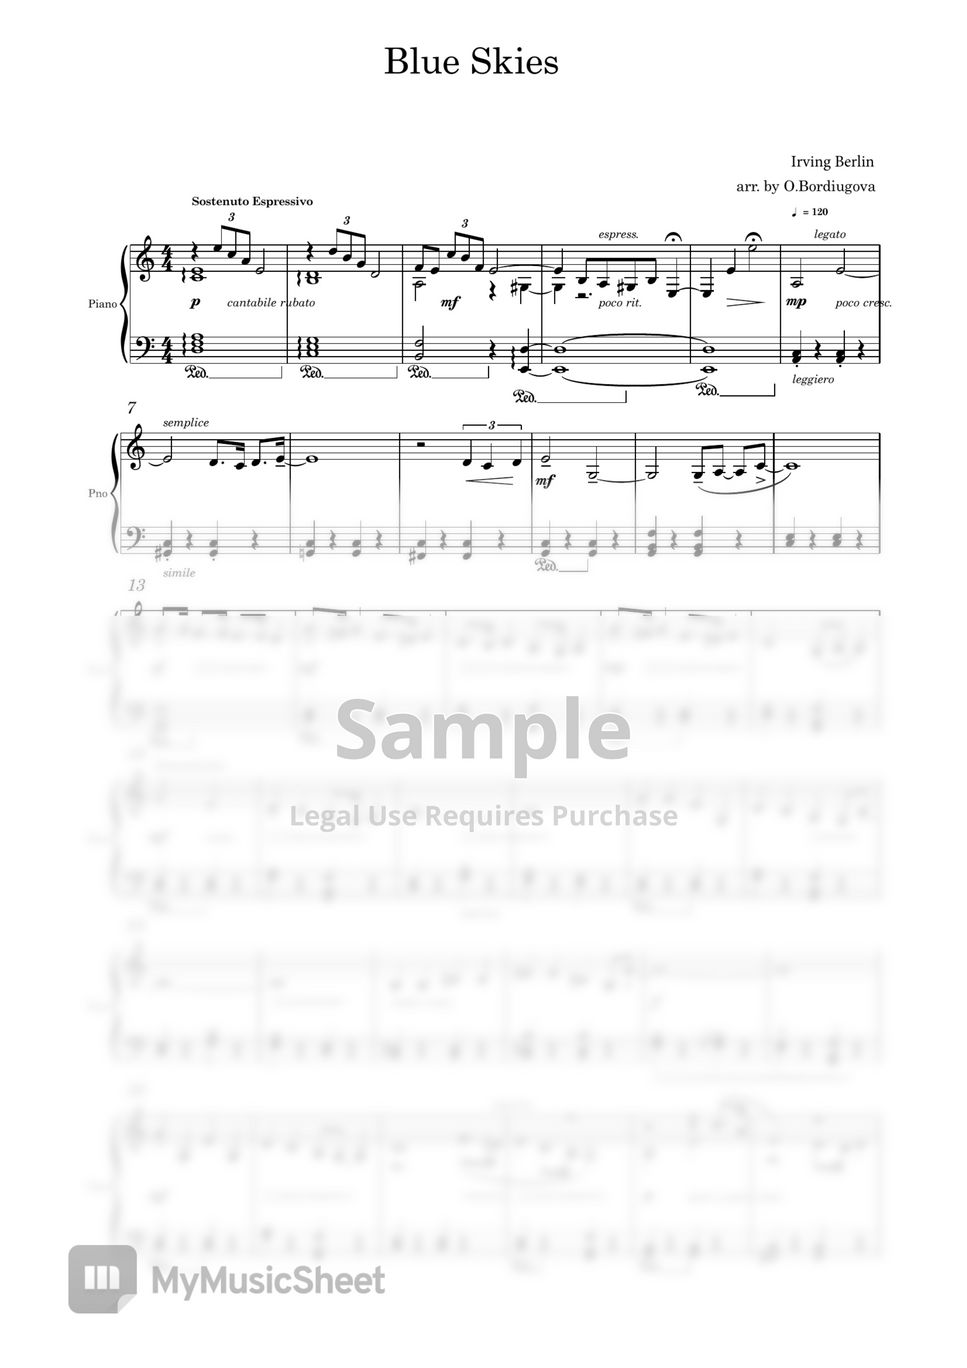 Irving Berlin - Blue Skies (Easy Piano Arrangement) by Edora